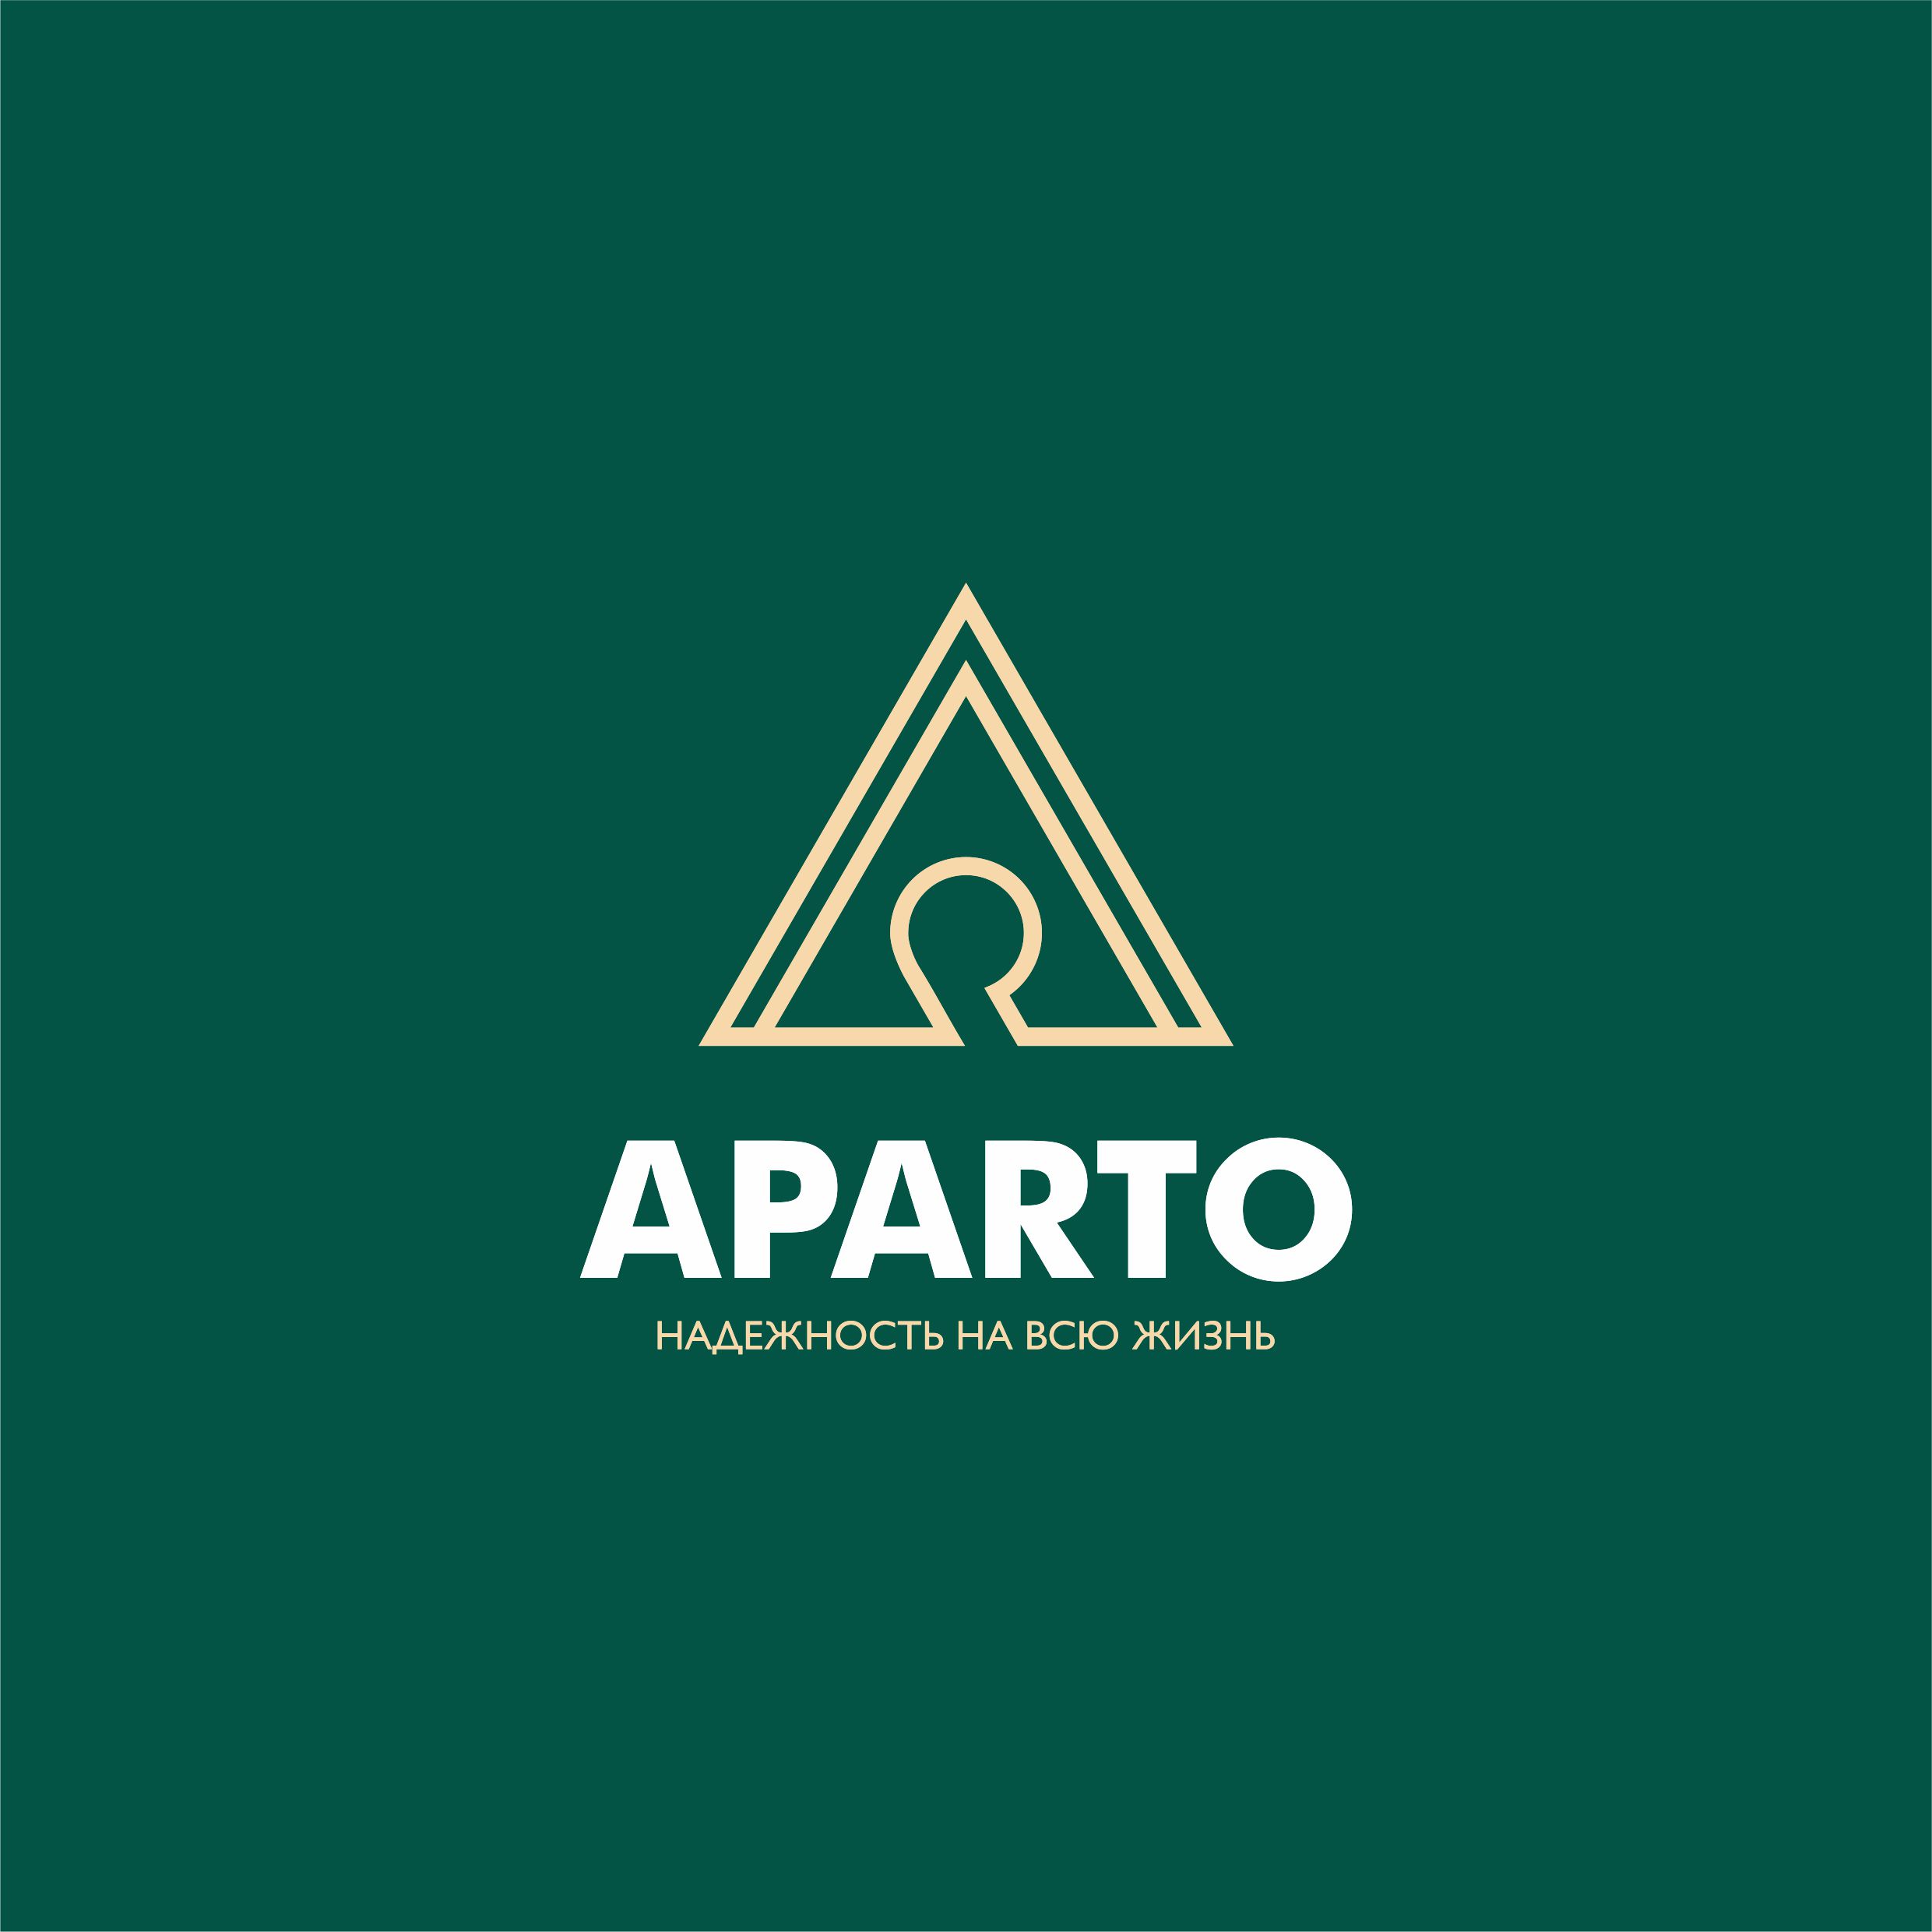 Branding Design Agency Creates Branding For Aparto Real Estate Agency